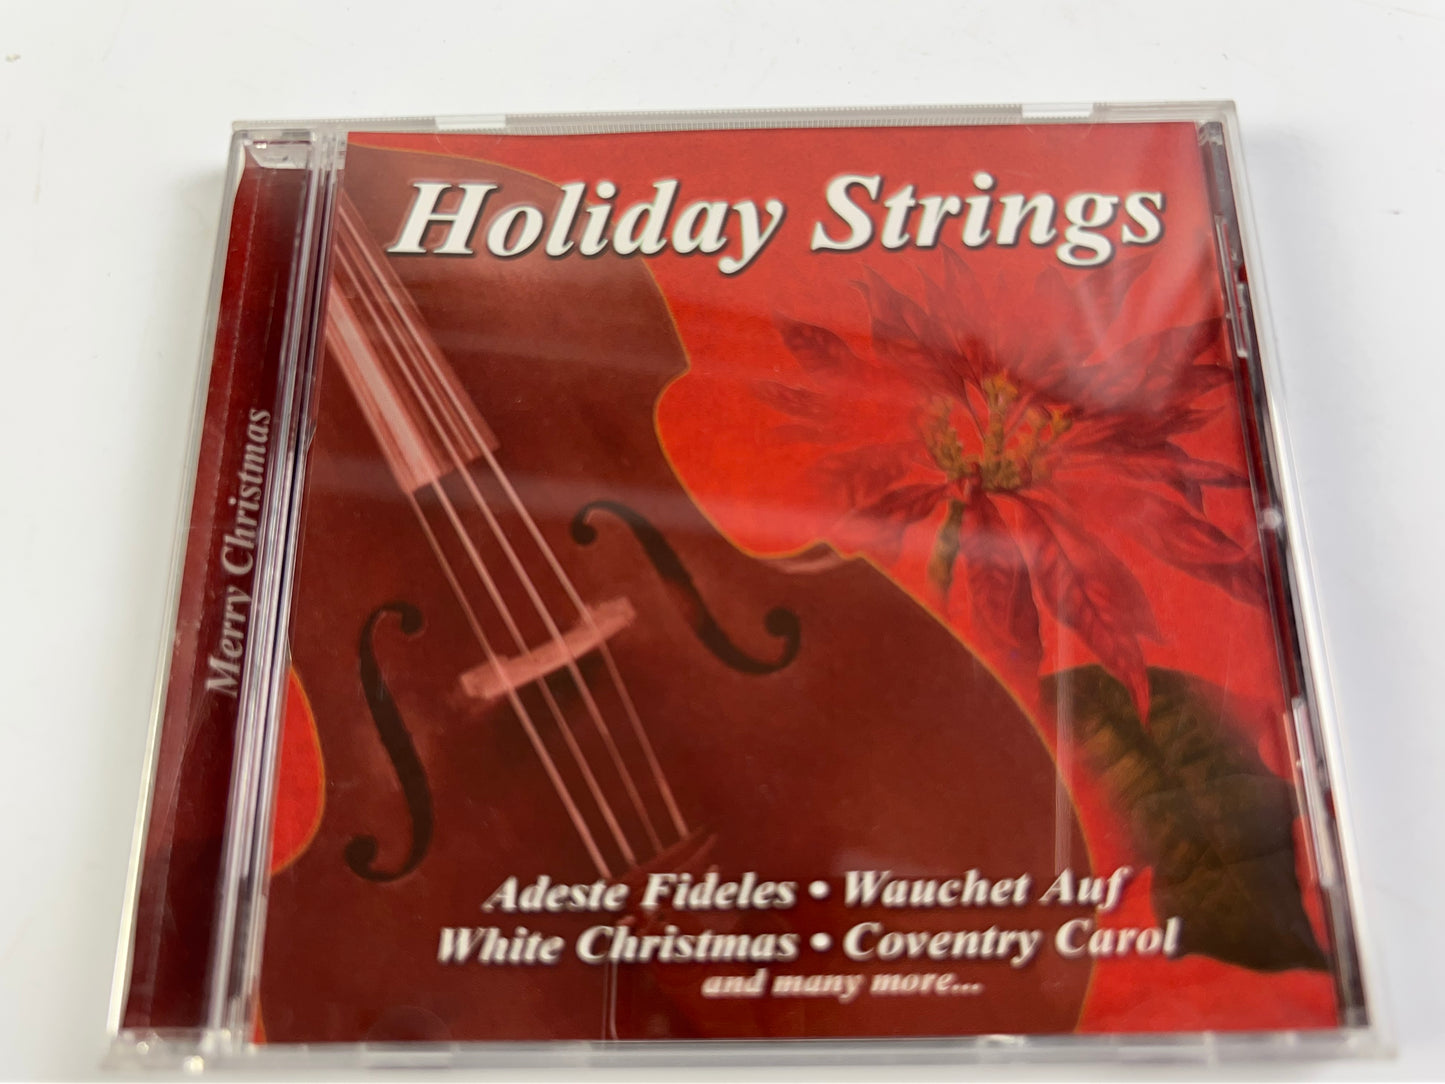 Holiday Strings by Mistletoe Players (CD, Aug-2002, Christmas CD